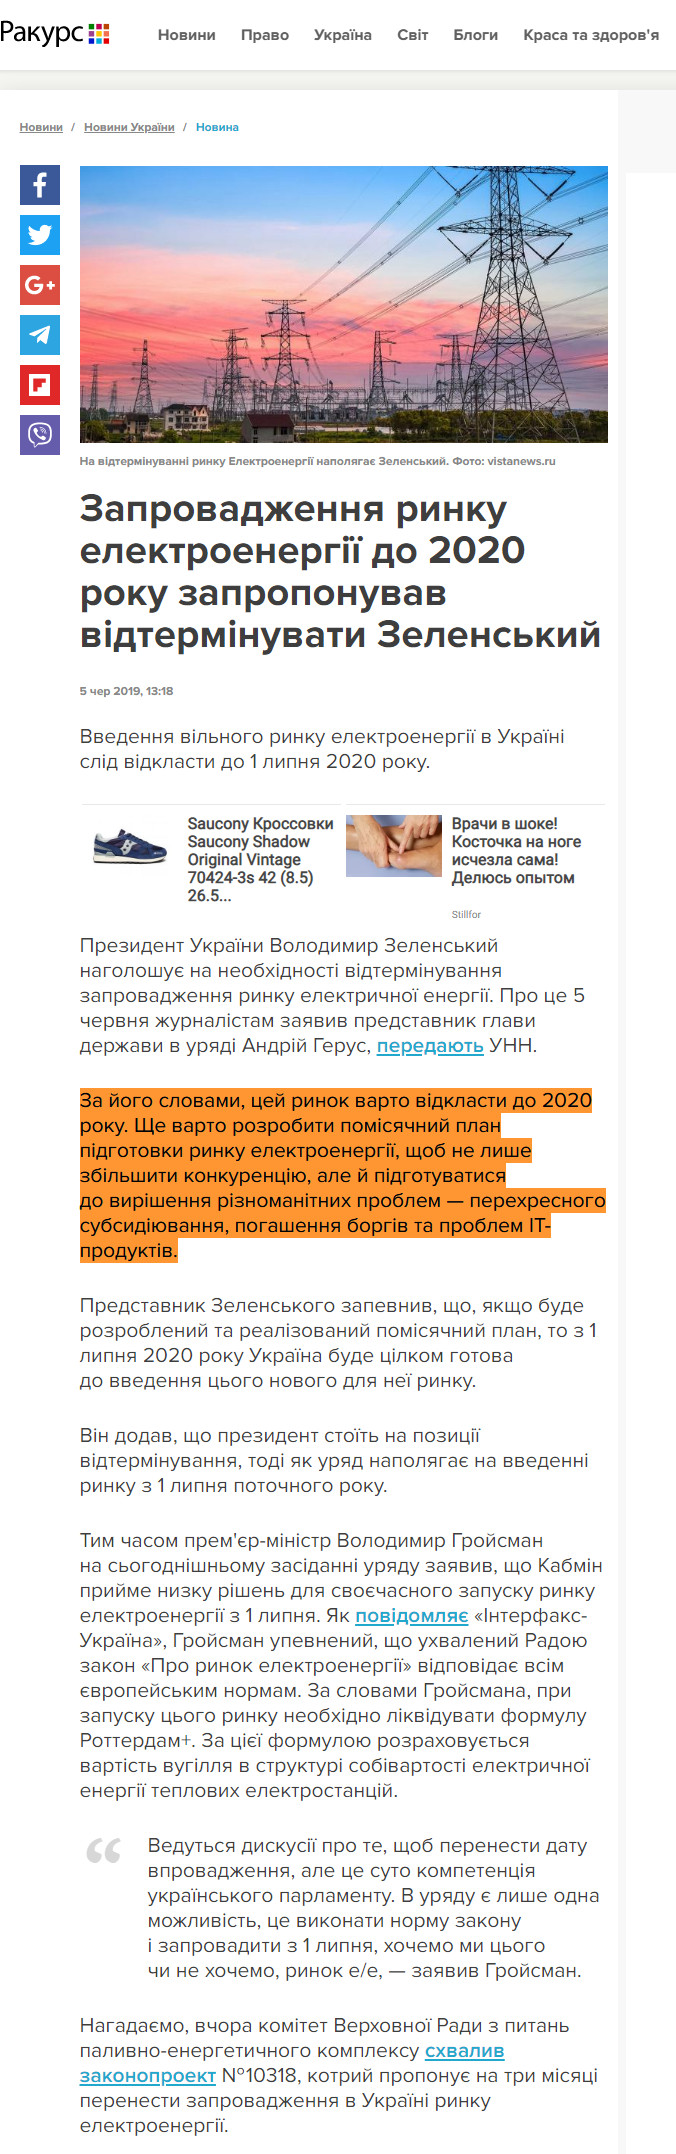 https://racurs.ua/ua/n122792-zaprovadjennya-rynku-elektroenergiyi-do-2020-roku-zaproponuvav-vidterminuvaty-zelenskyy.html